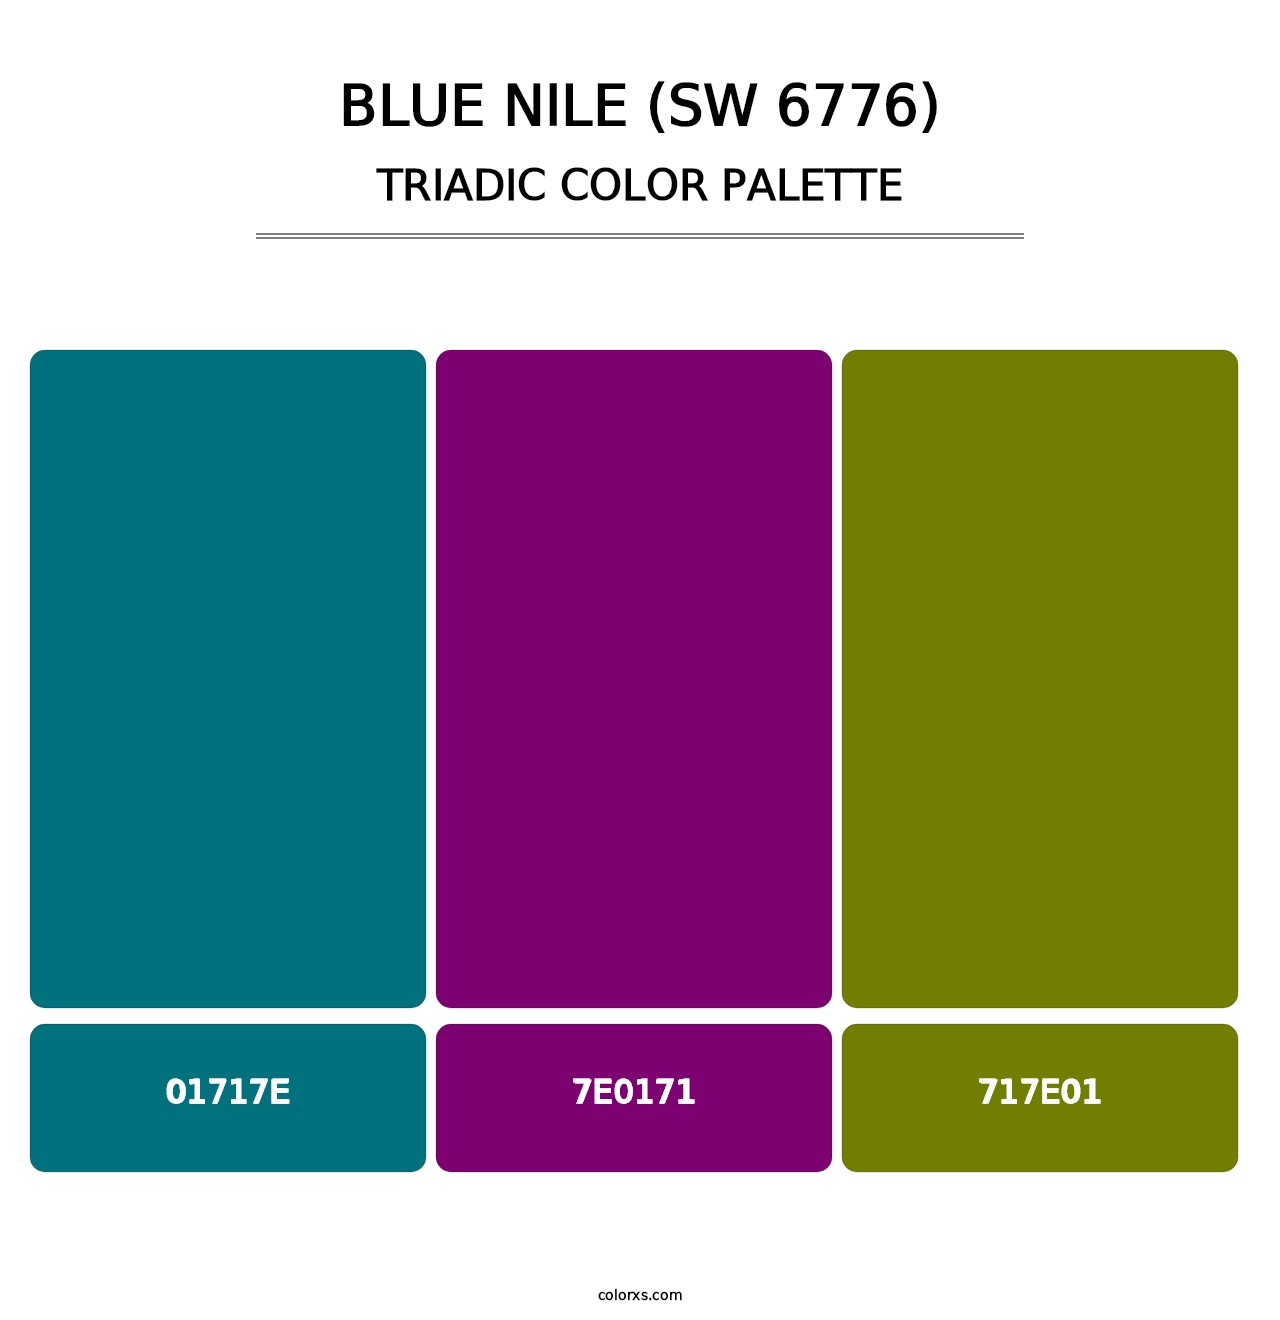 Blue Nile (SW 6776) - Triadic Color Palette